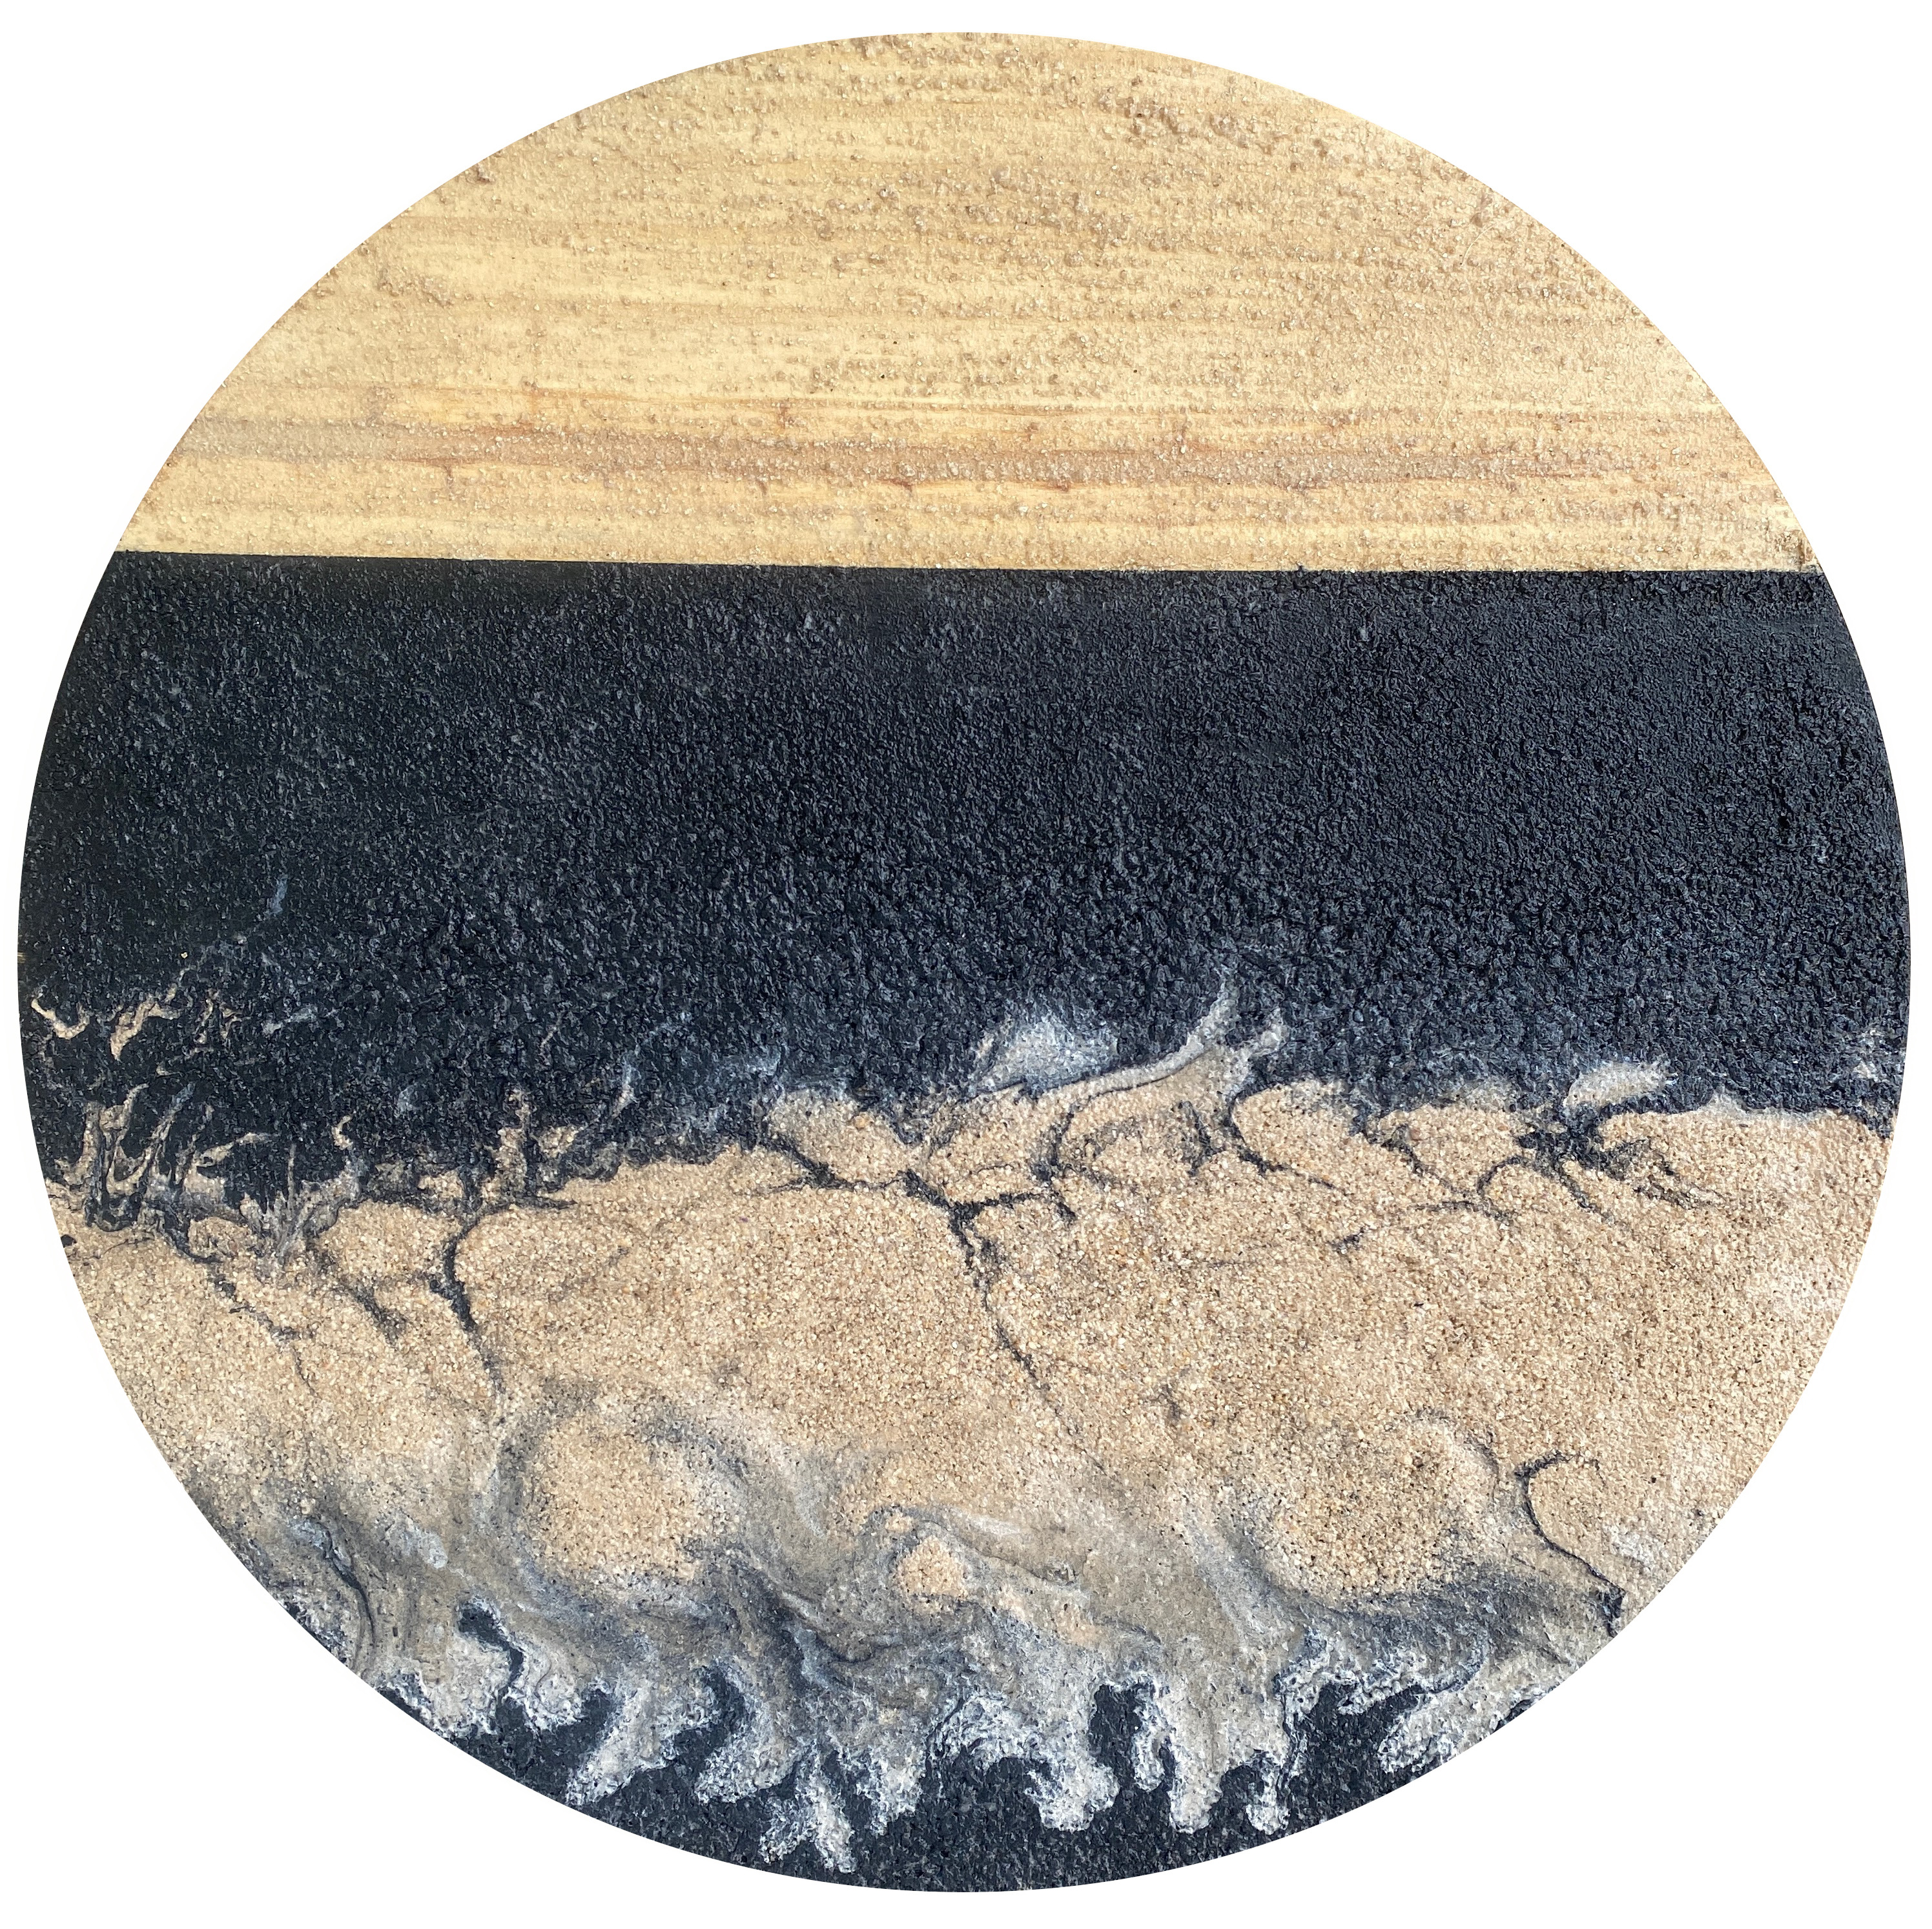 Andrea cermanski arroyo 2023 burnt tumbleweed sandstone and polymer on wood 18inch diameter apkwxc